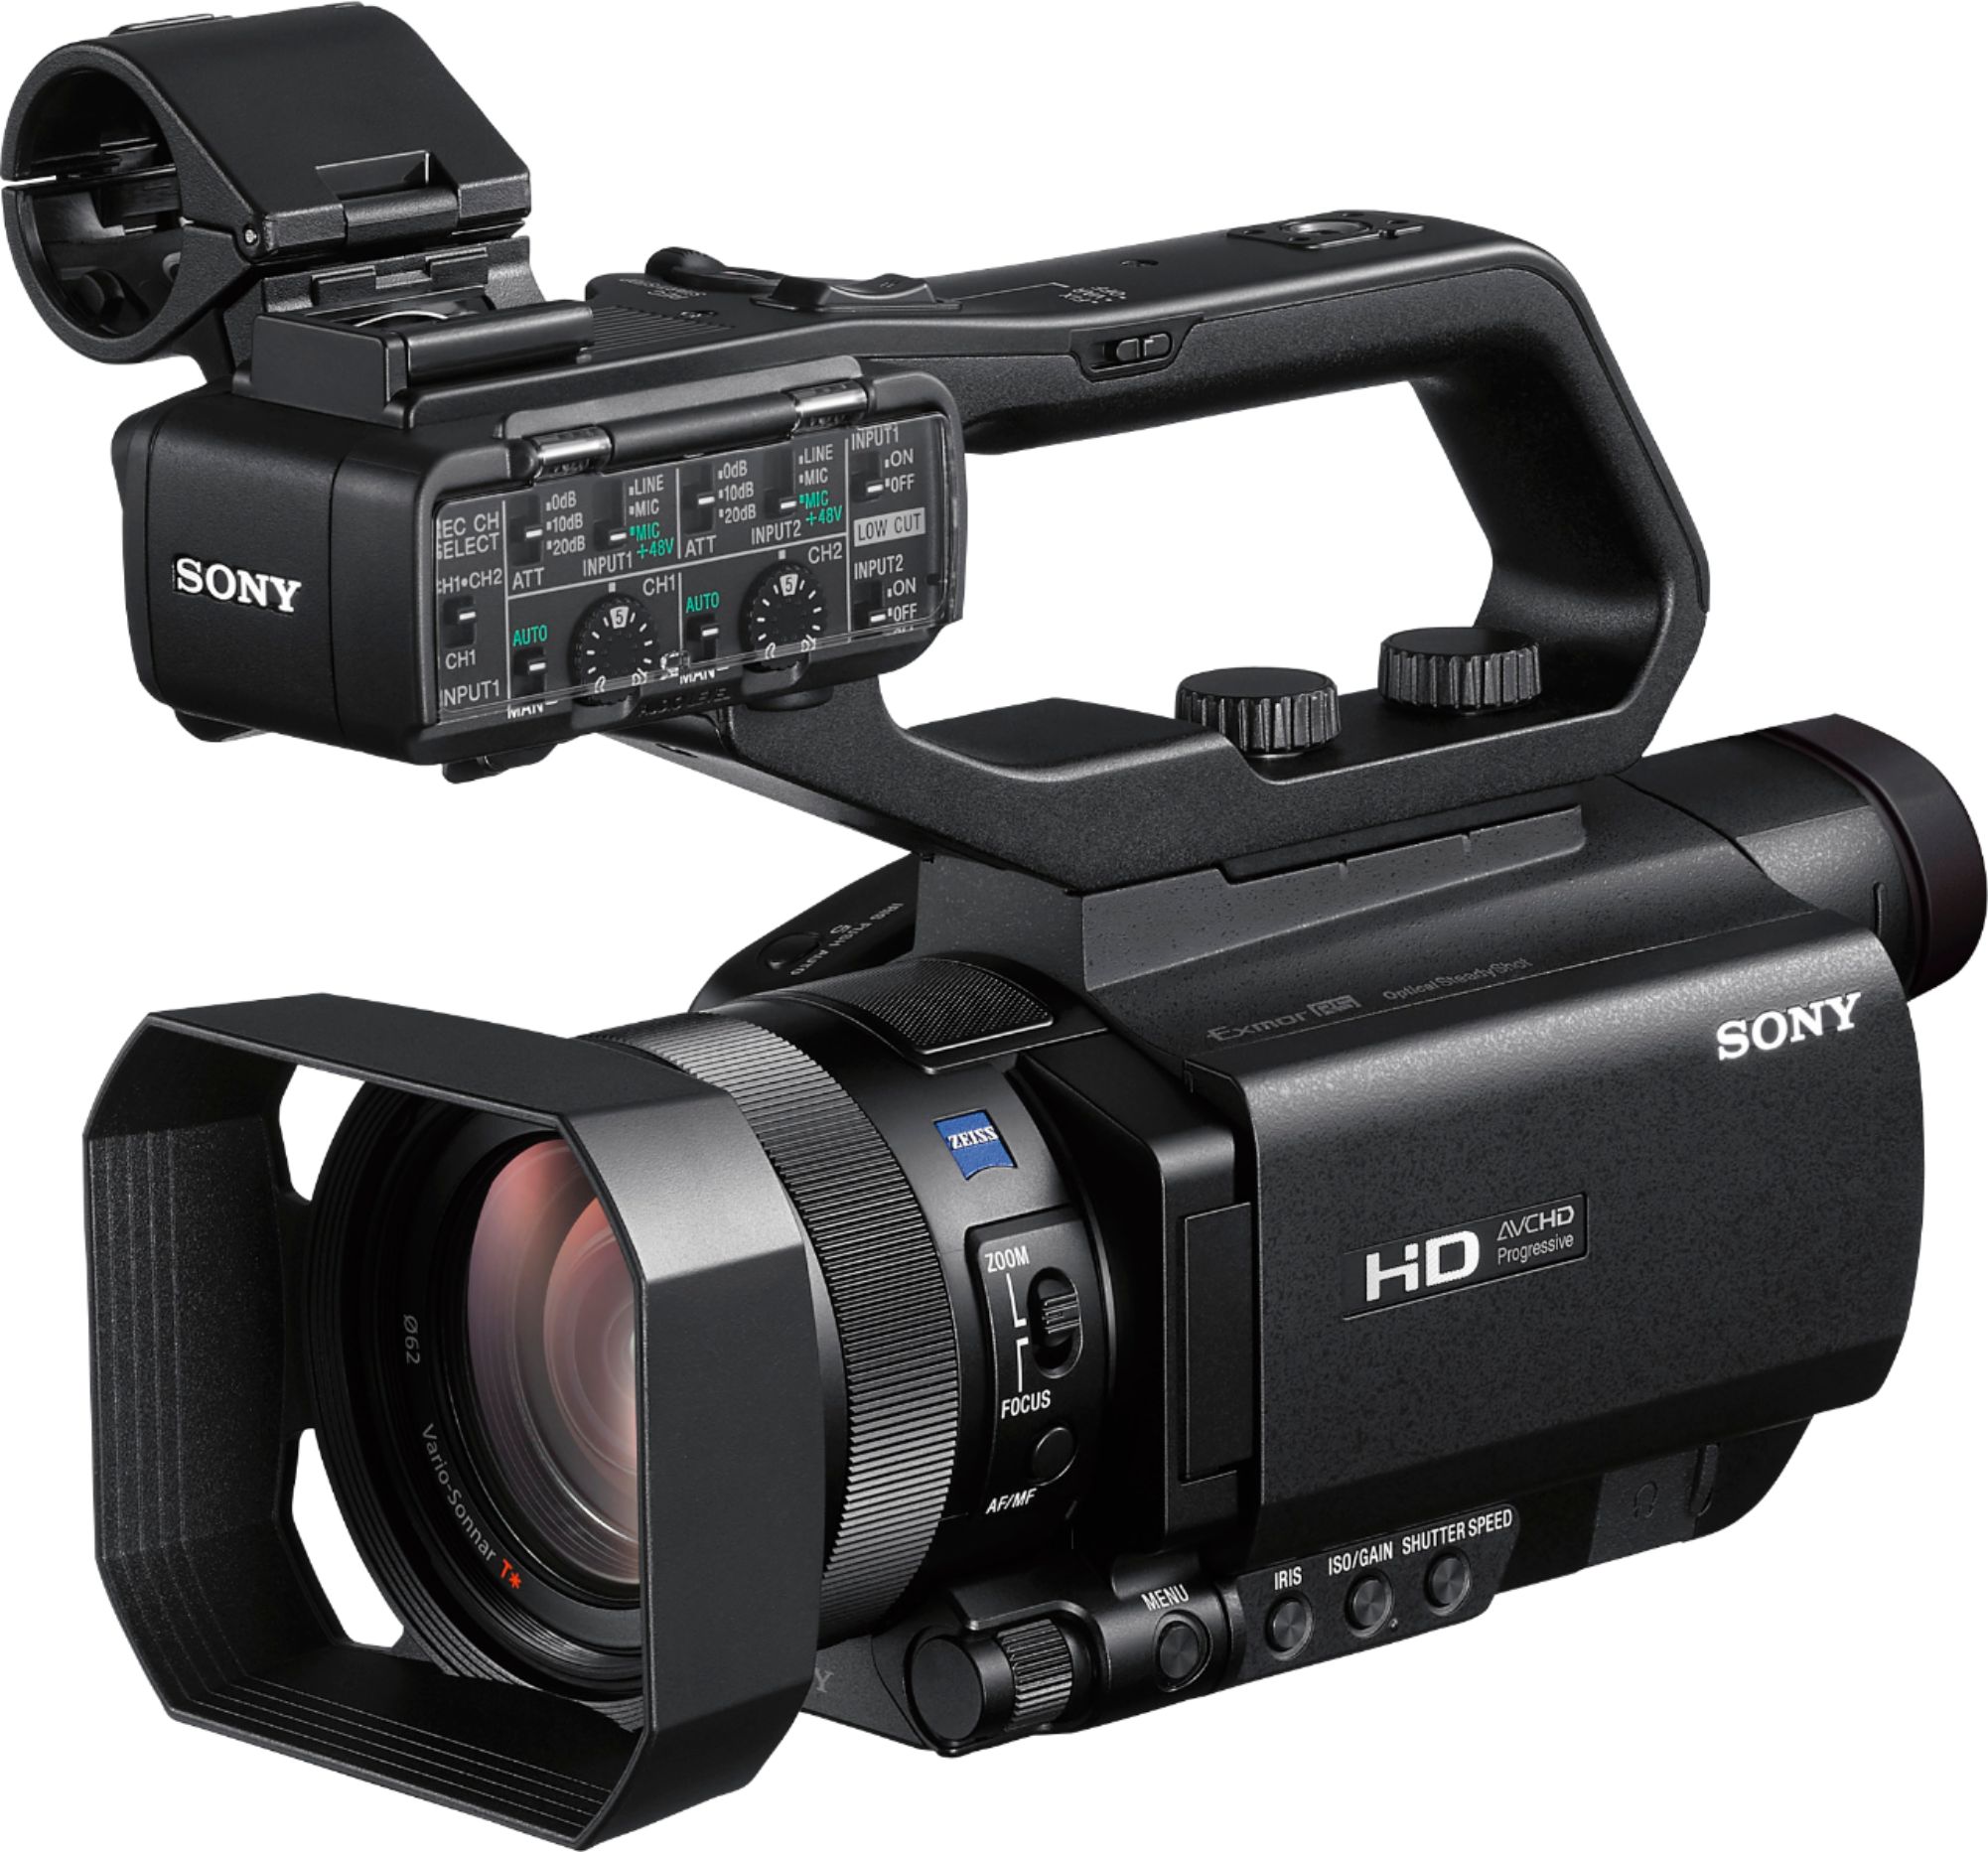 Angle View: Sony - HXR-MC88 HD Flash Memory Camcorder - Black